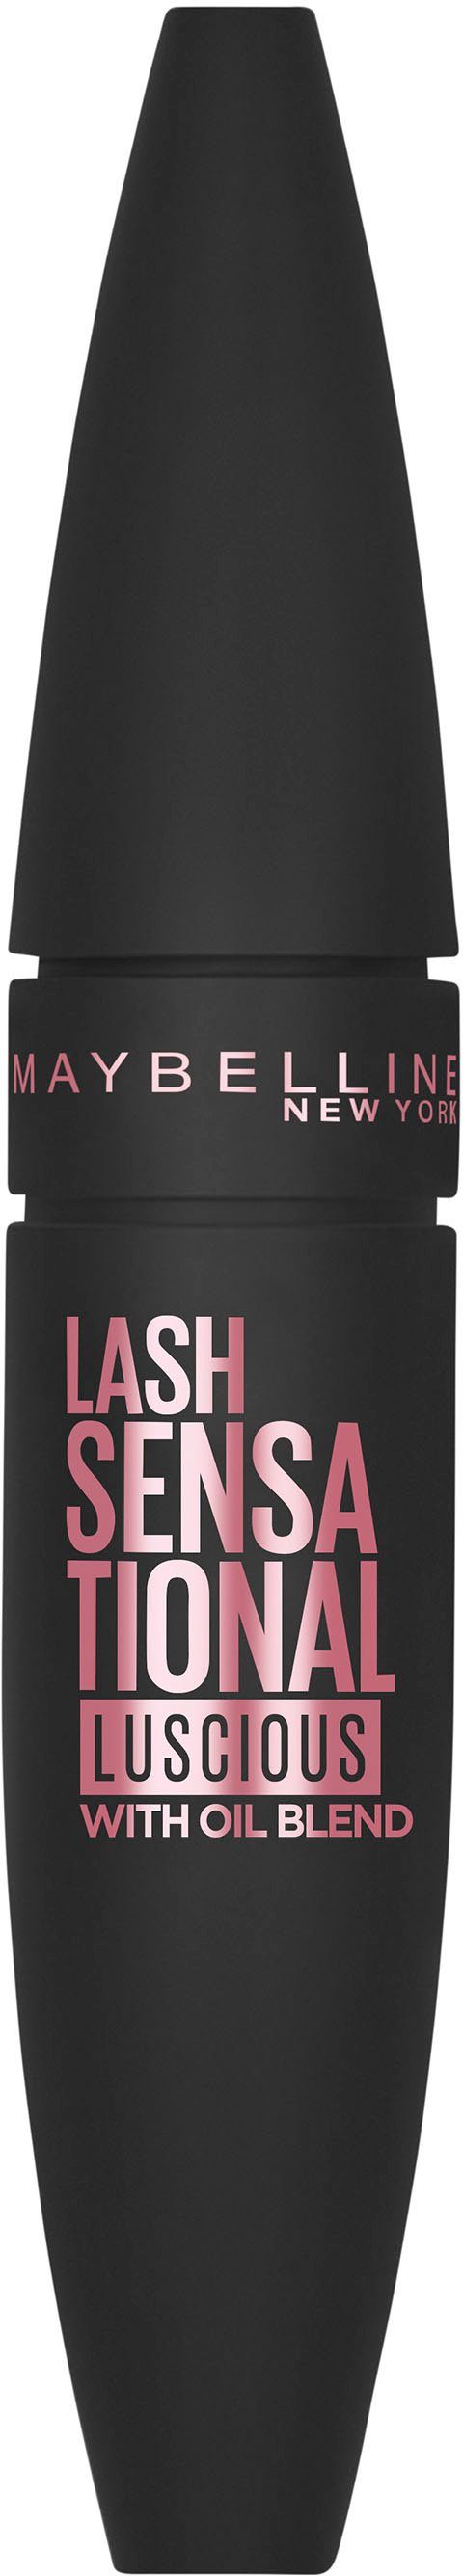 YORK Lash Sensational MAYBELLINE Mascara NEW Luscious